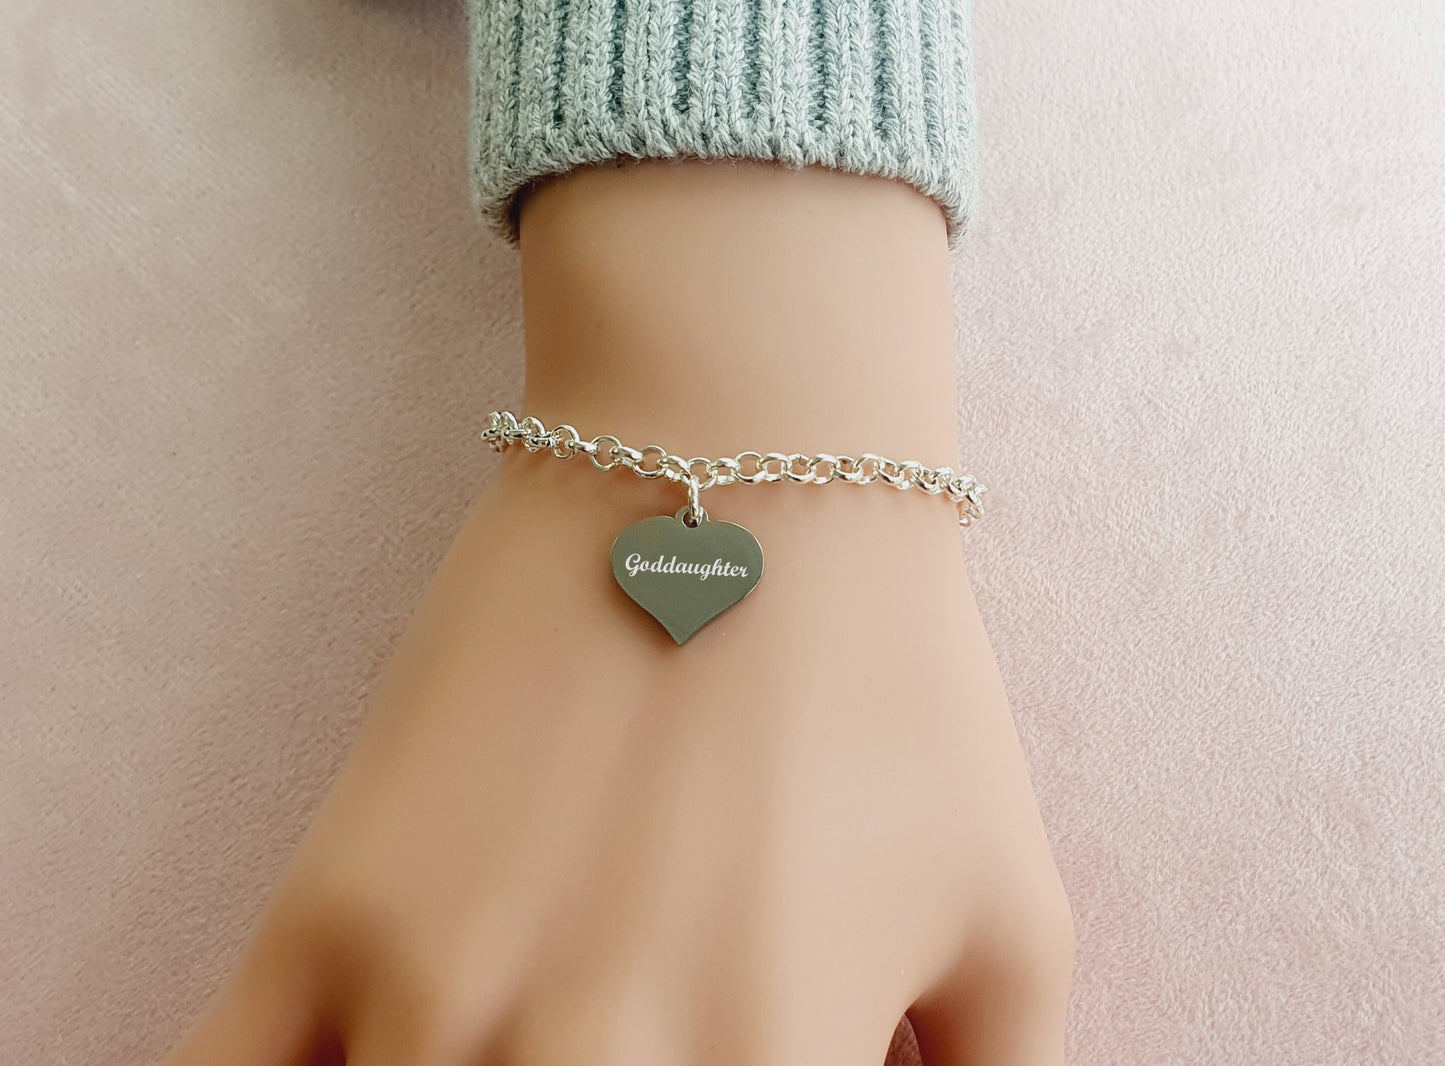 Goddaughter Engraved Heart Charm Link Bracelet, Personalised Bracelet Message Jewellery